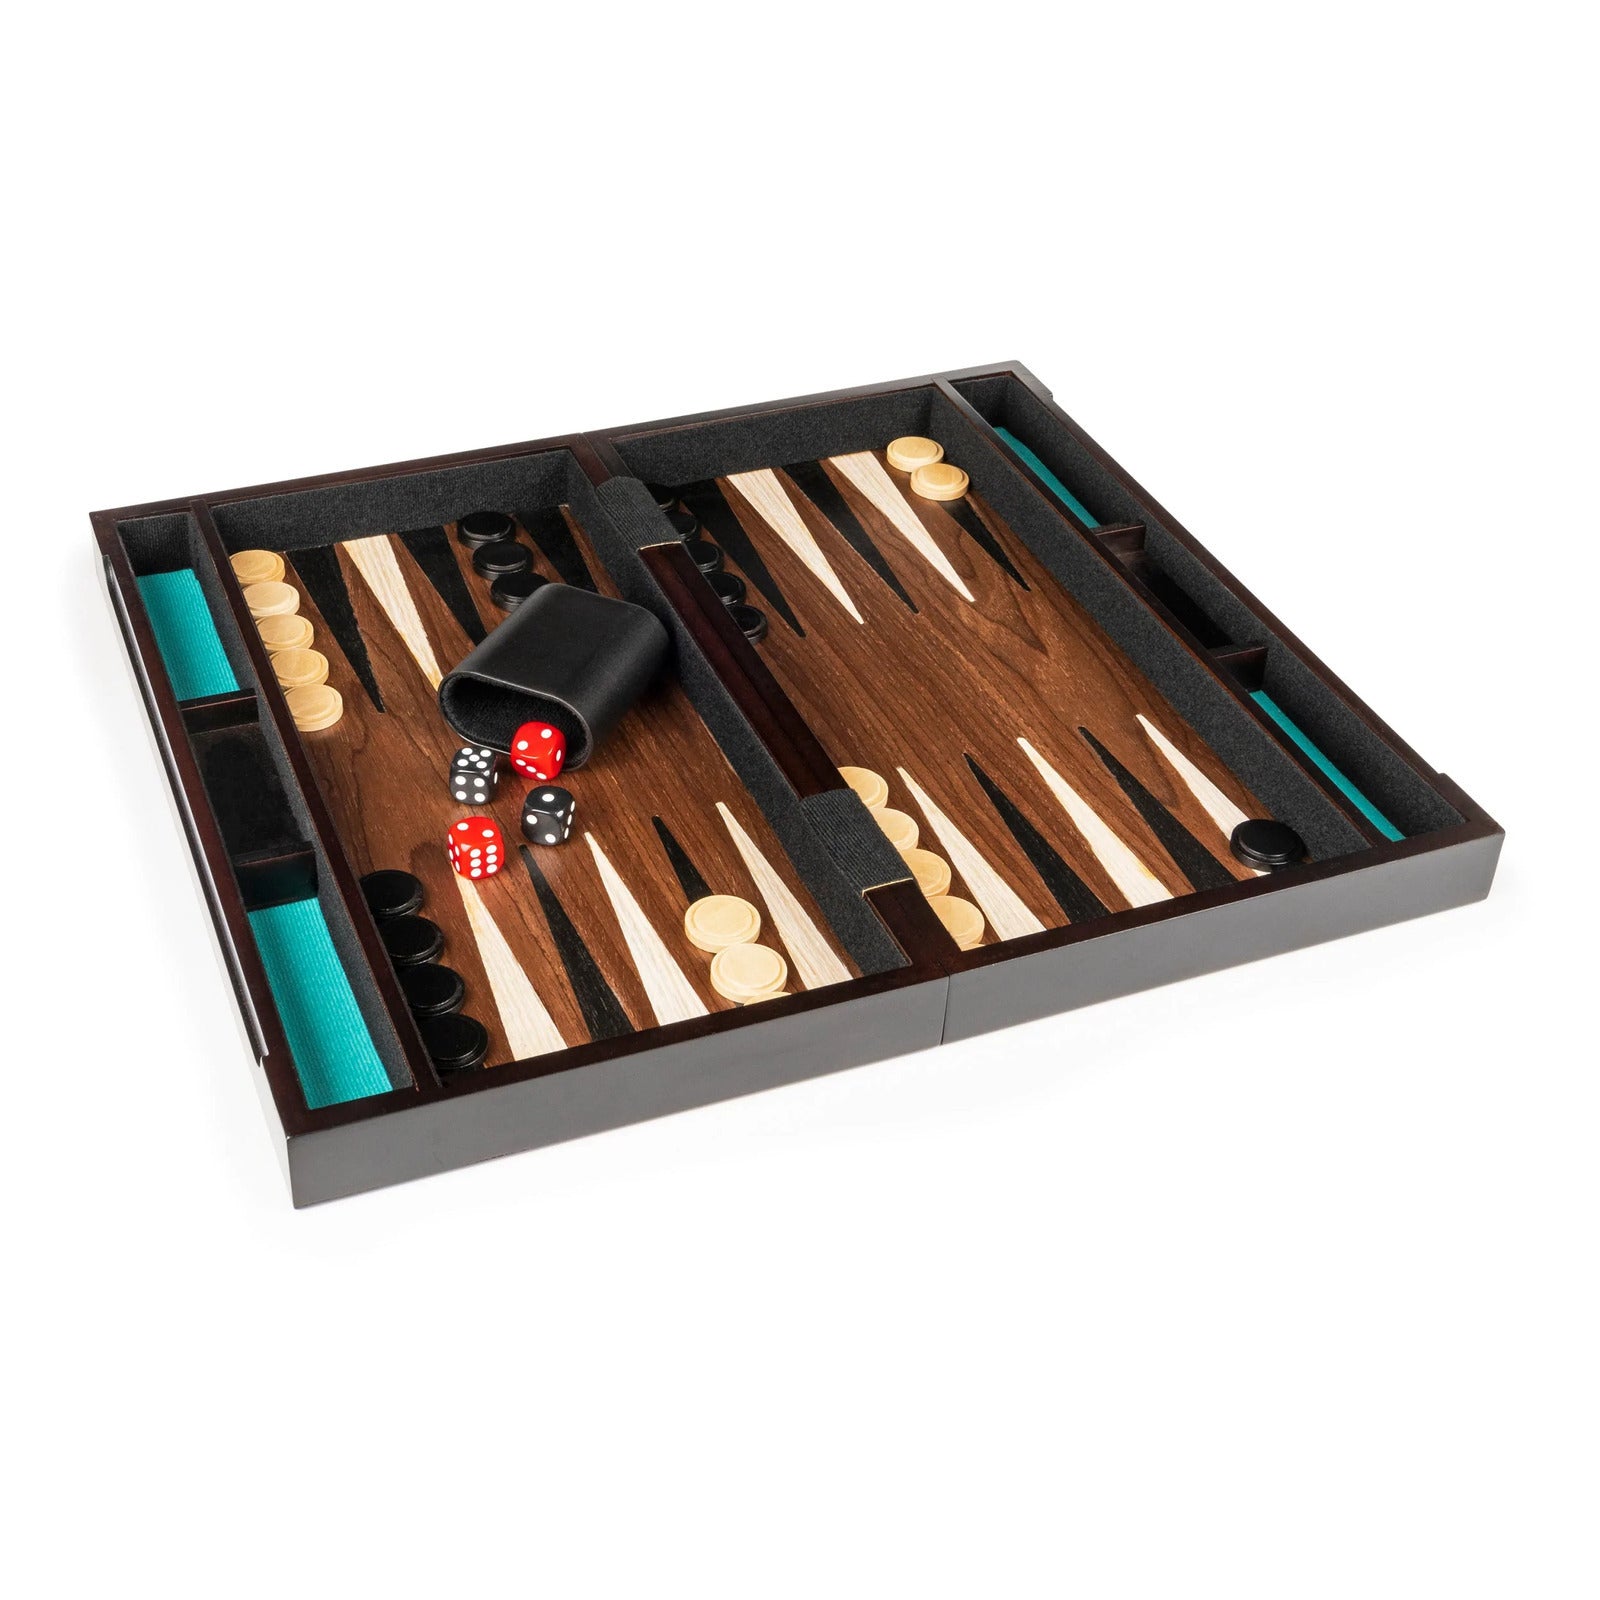 Backgammon Legacy Deluxe